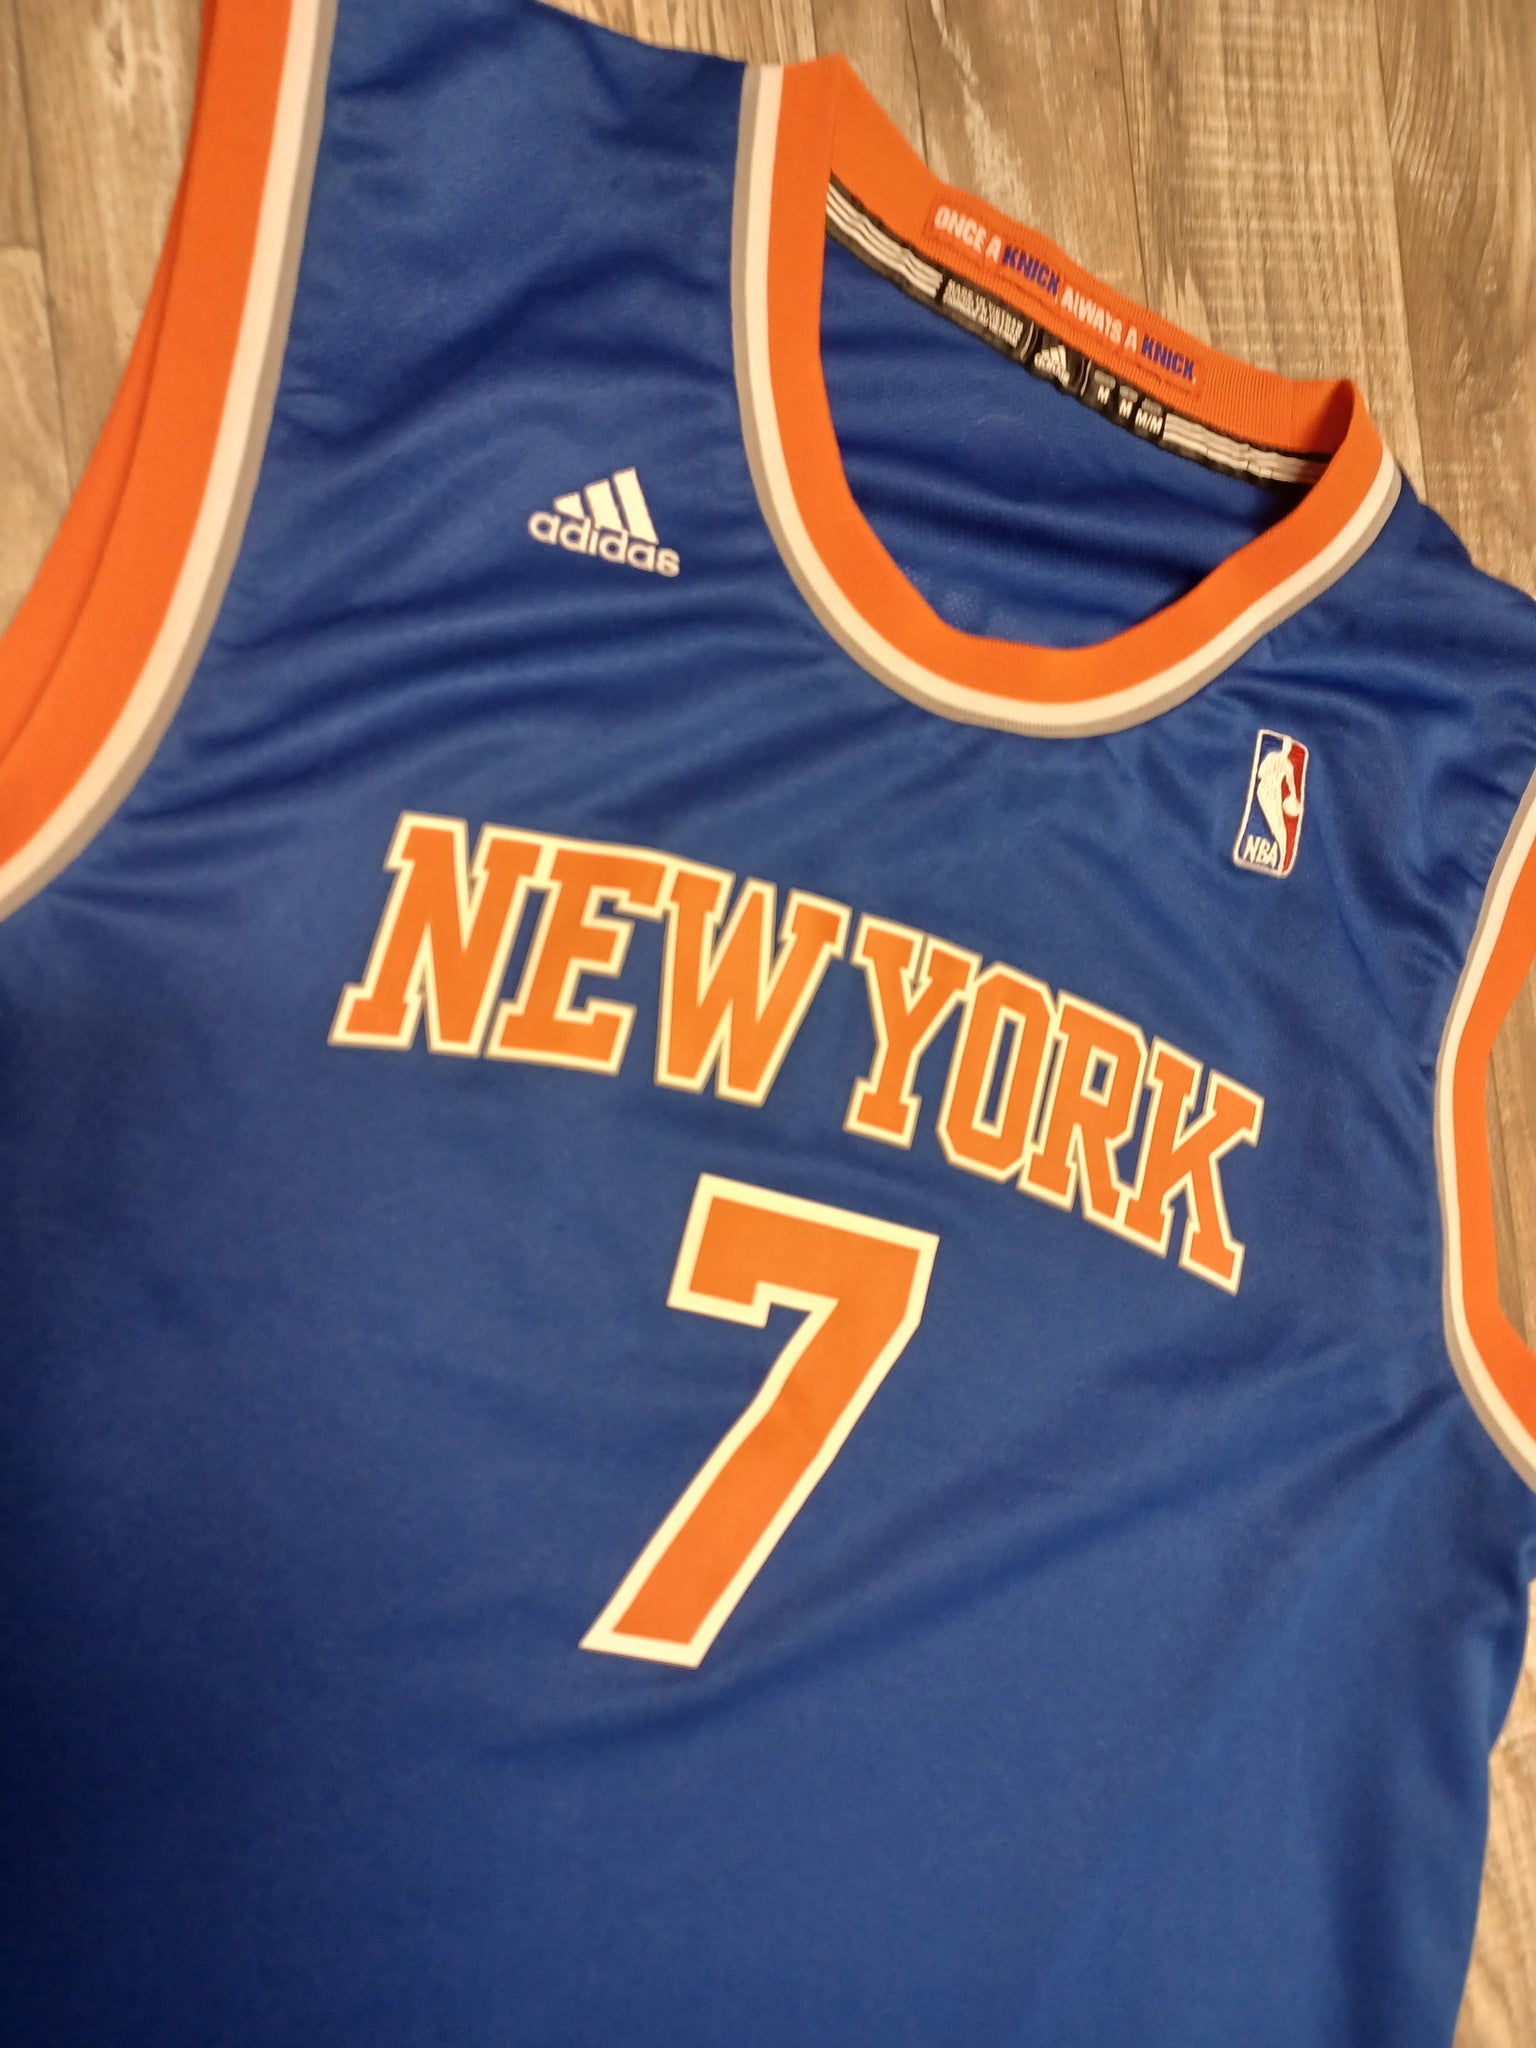 Carmelo Anthony New York Knicks Jersey Mask by SAYIDOWjpg